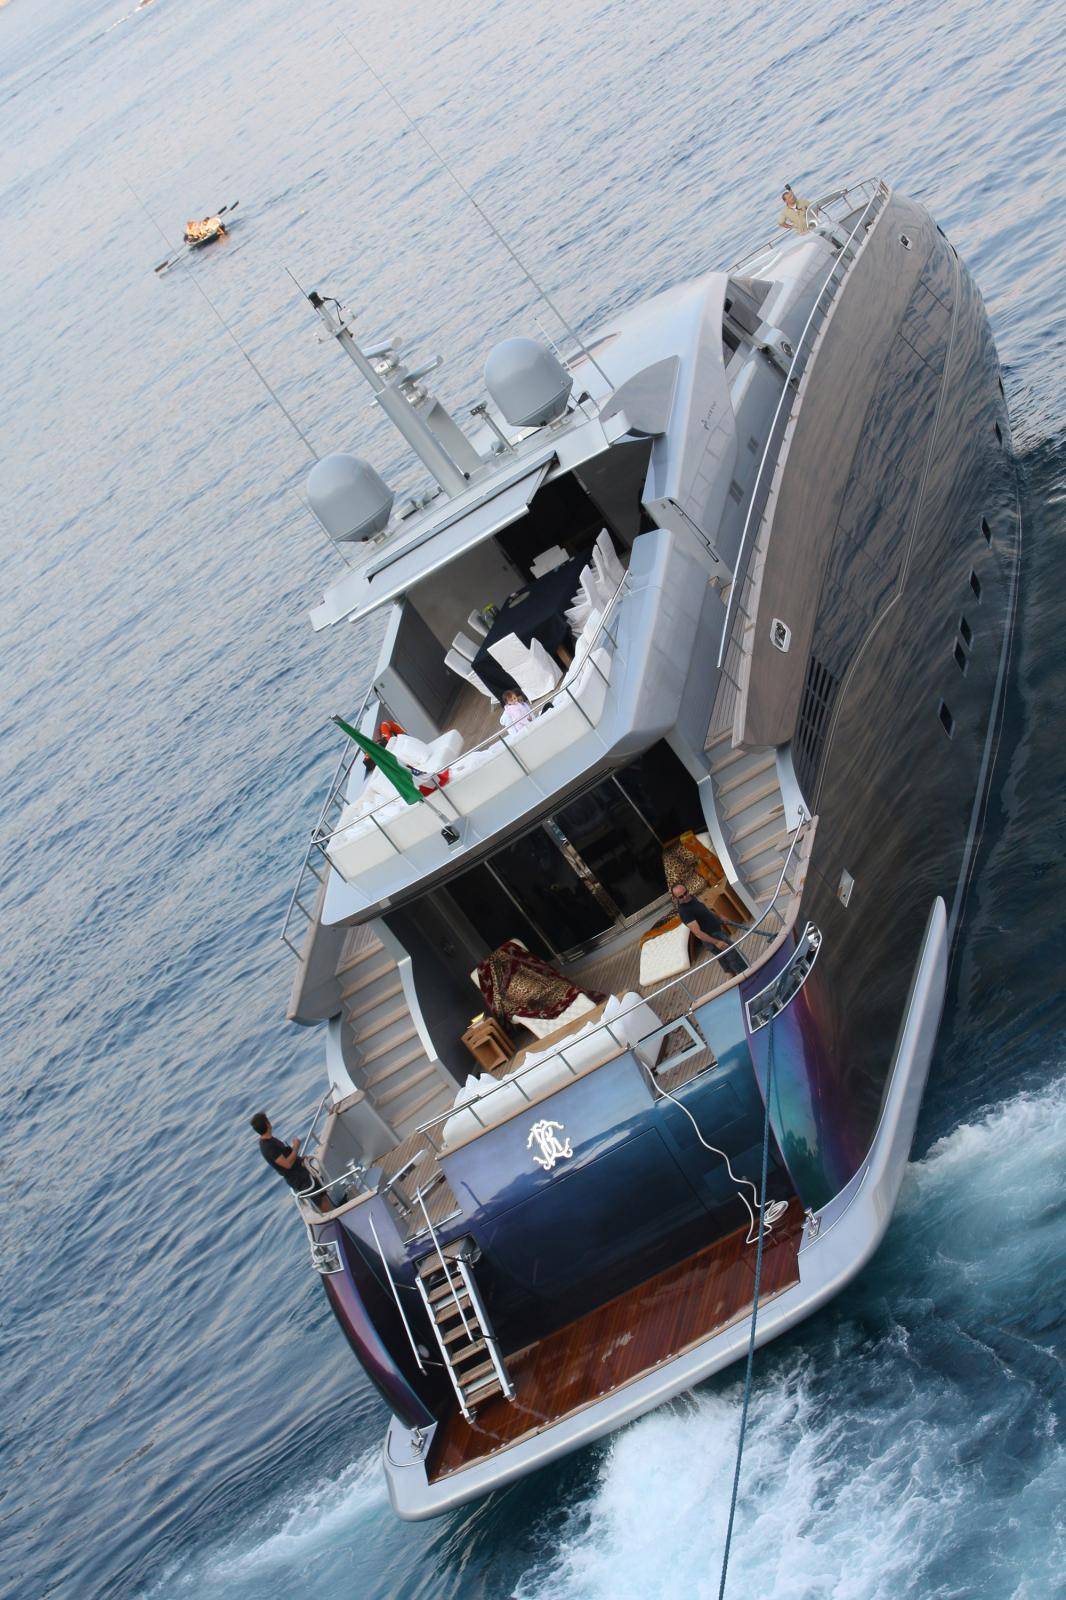 Roberto Cavalli on his yacht in Portofino, Liguria, Italy